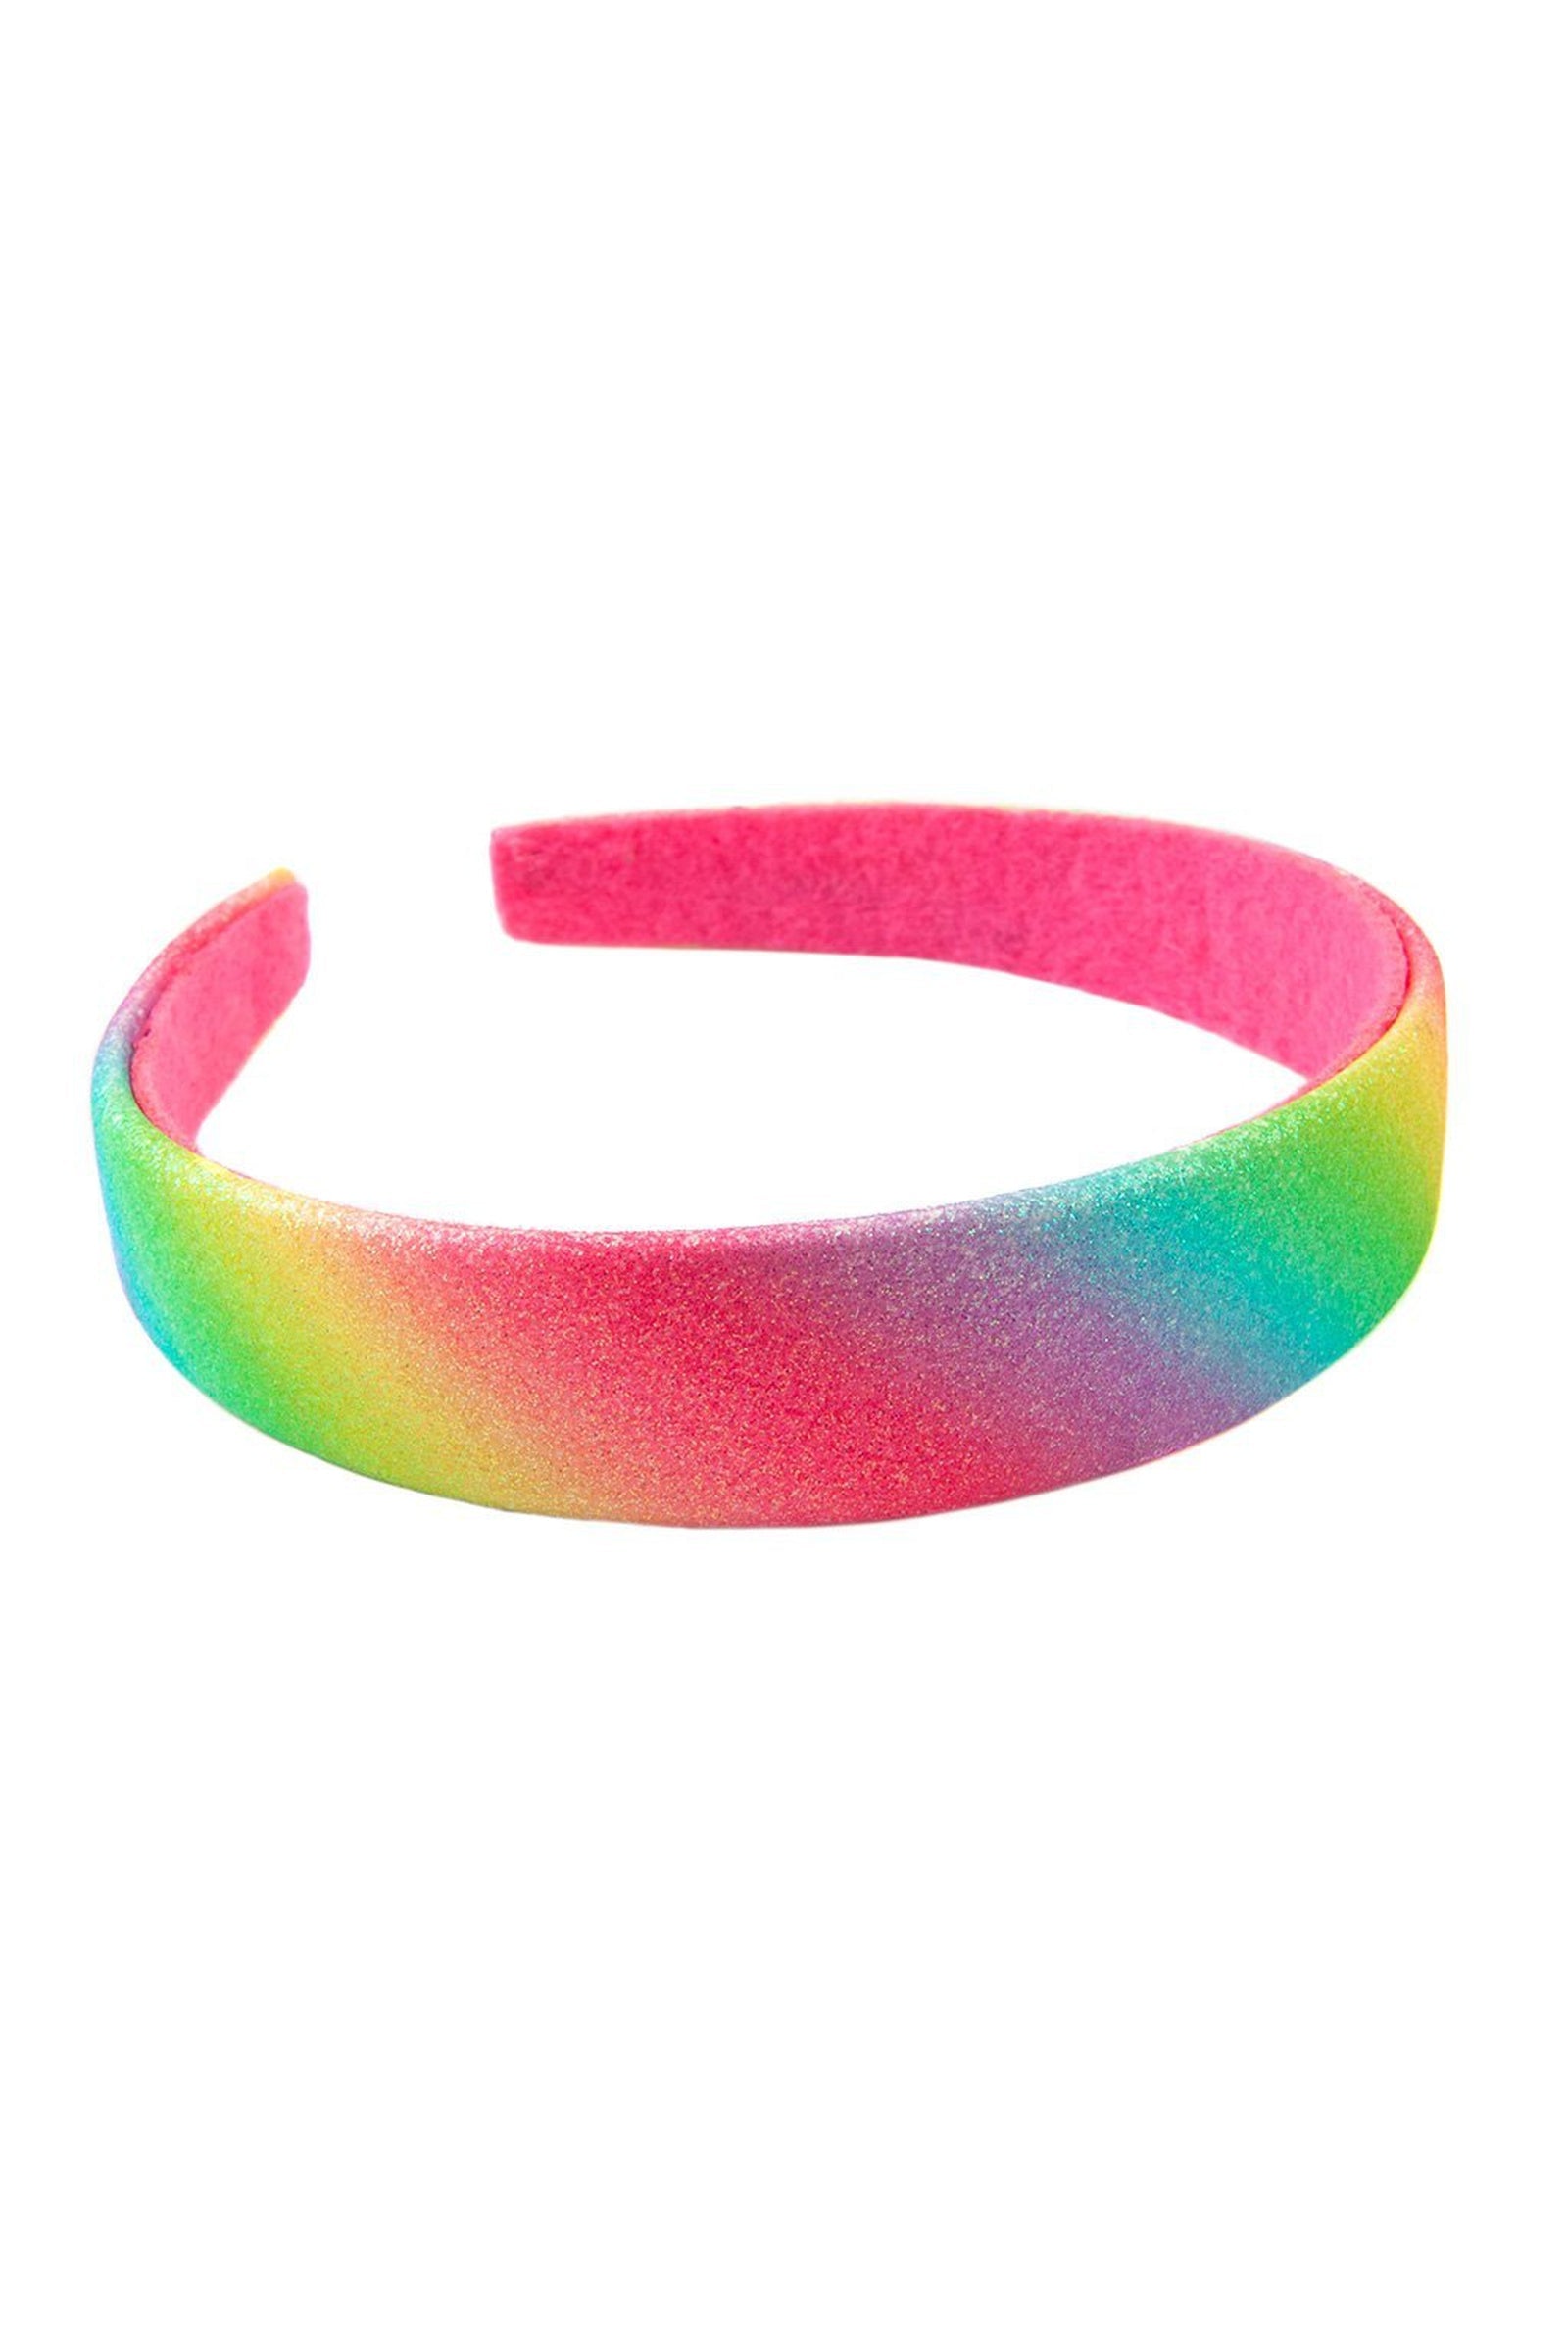 Chasing Rainbows Headband Accessories Great Pretenders   